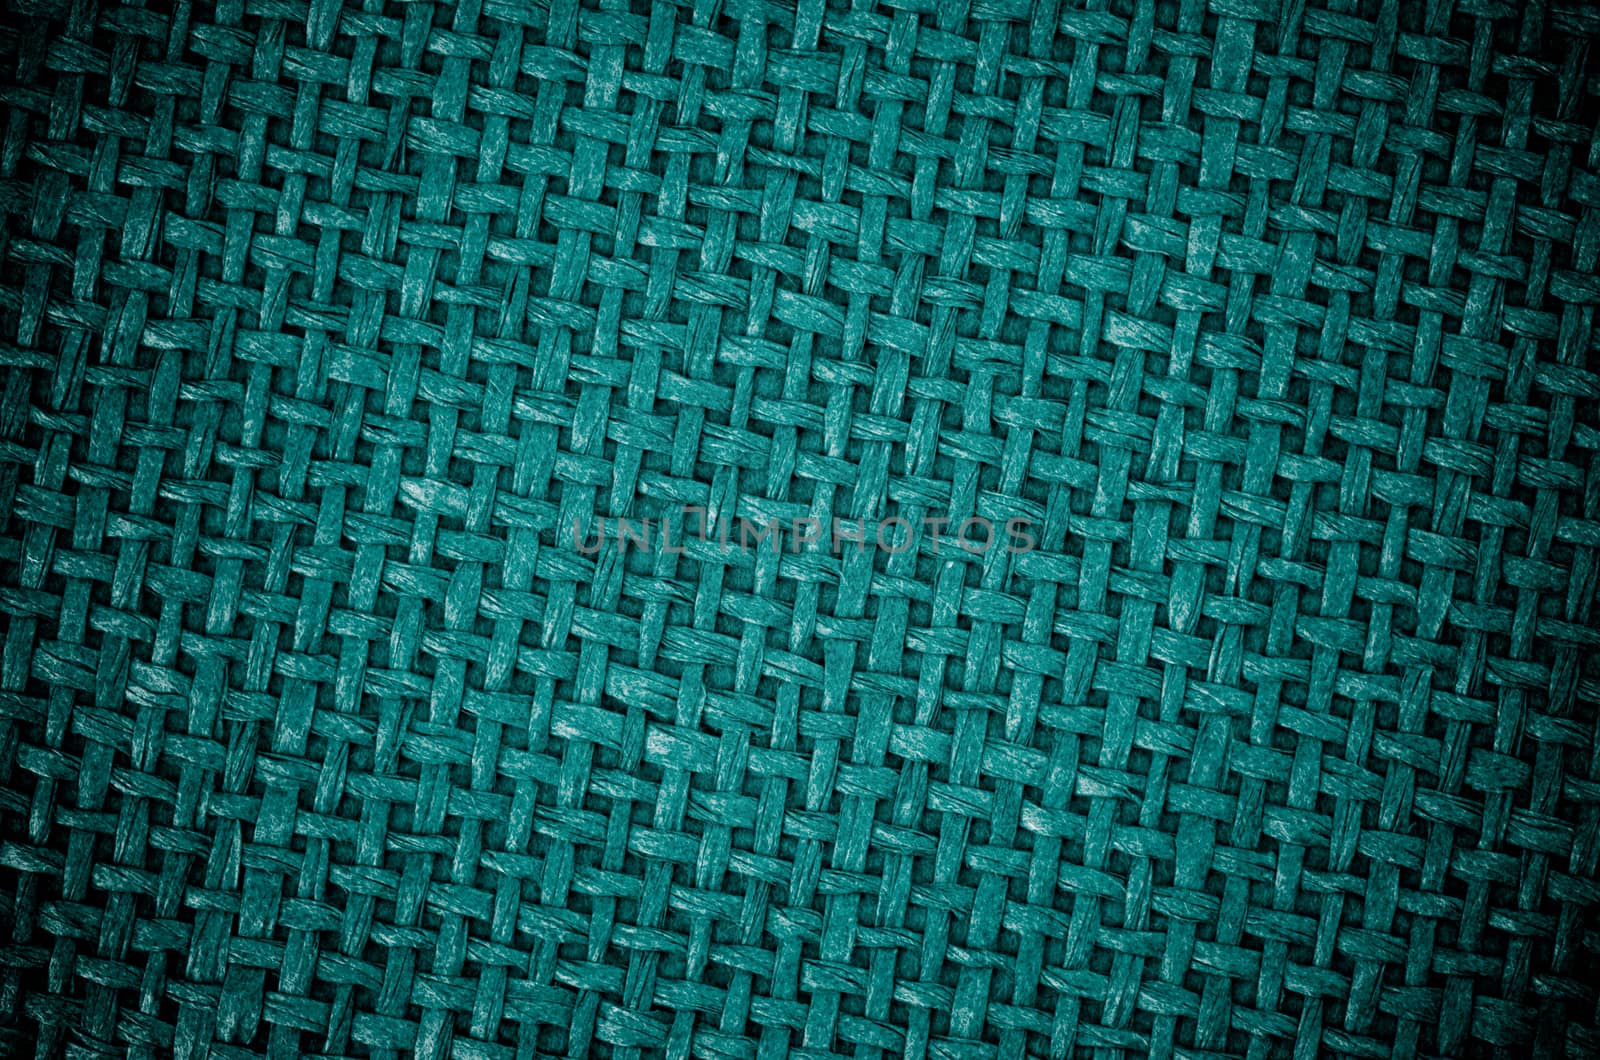 Background of Dark Green Textile Canvas closeup